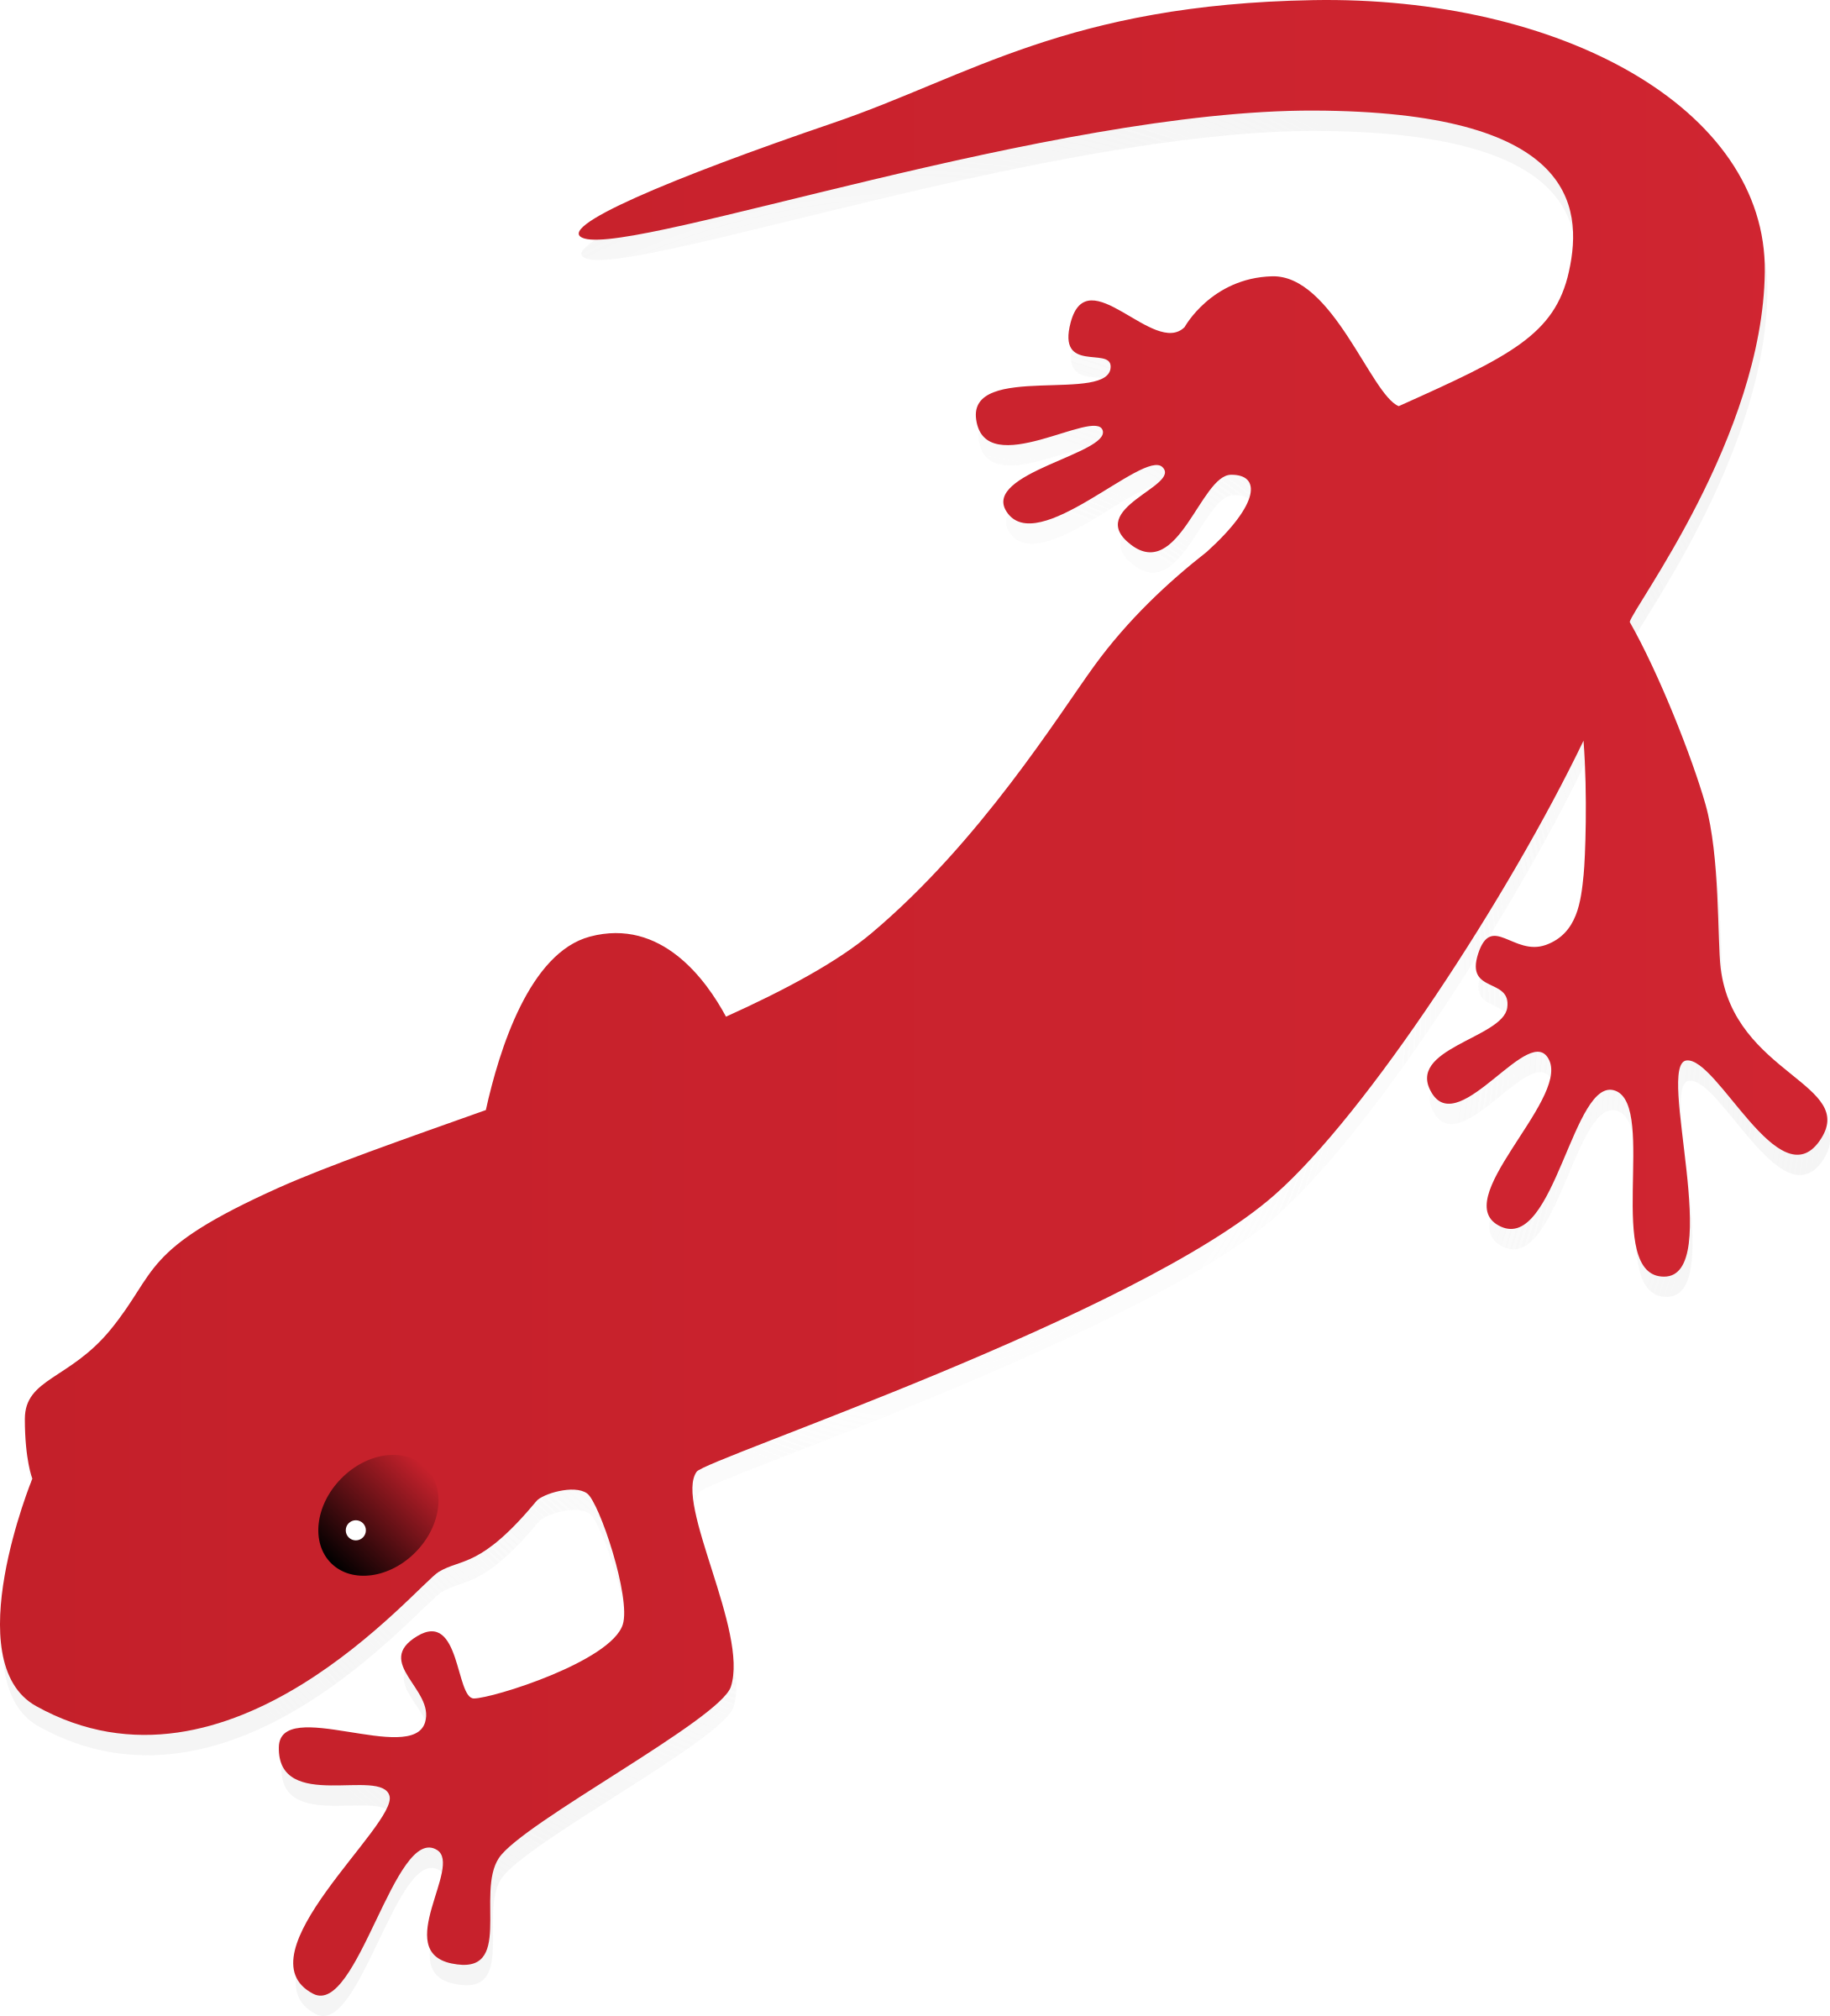 Royalty-Free (RF) Salamander 